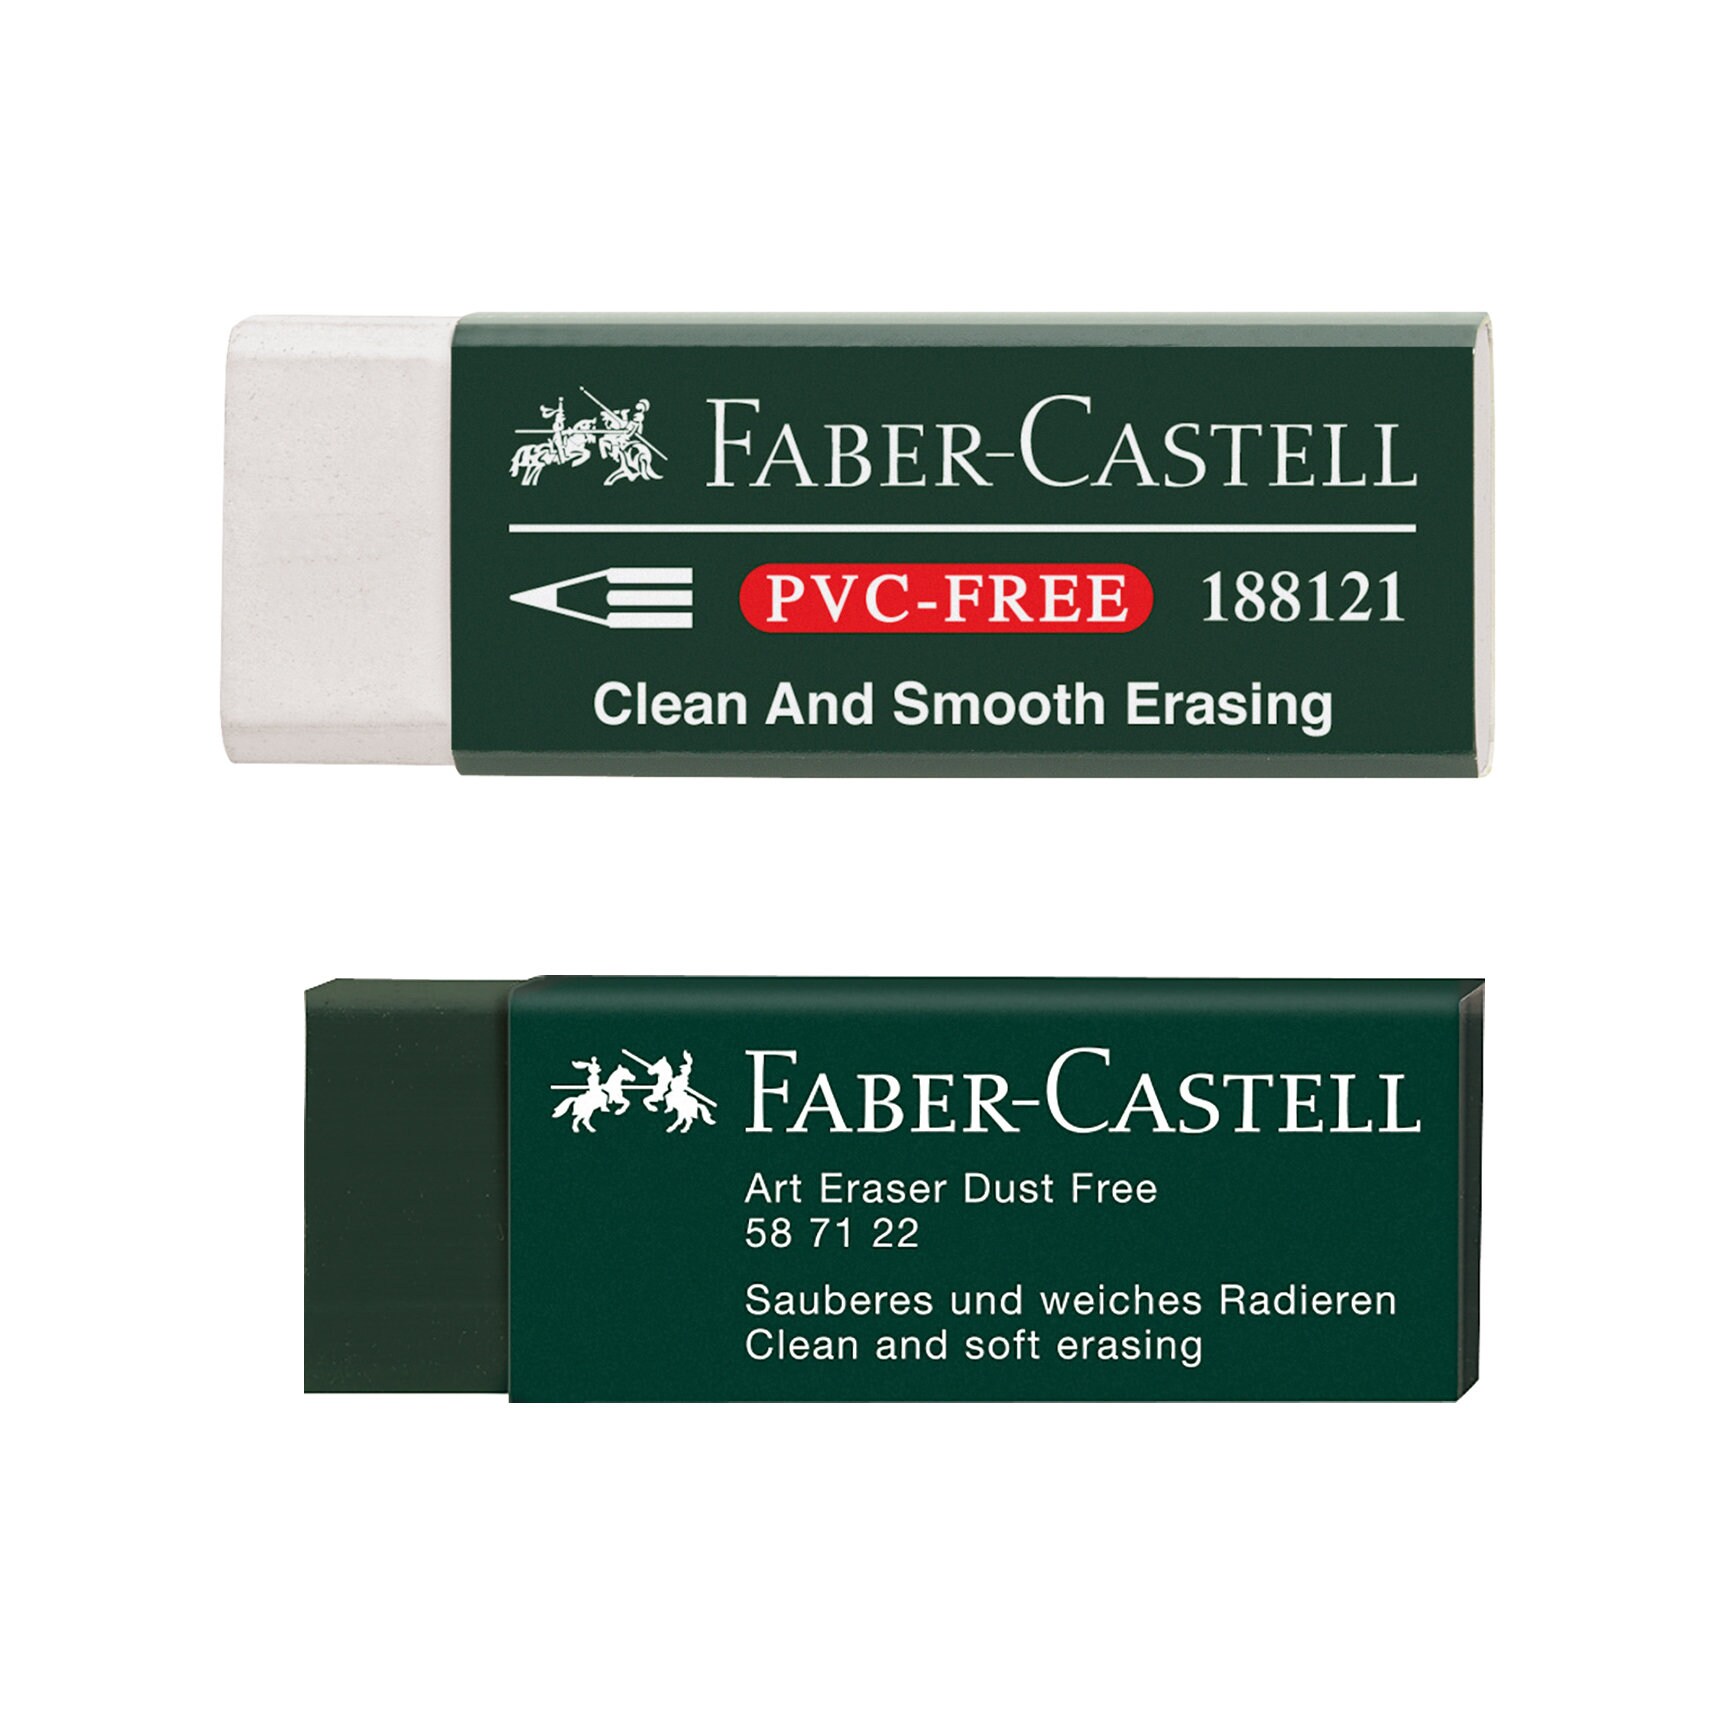 Faber-Castell Dust-Free Vinyl Art Eraser Green